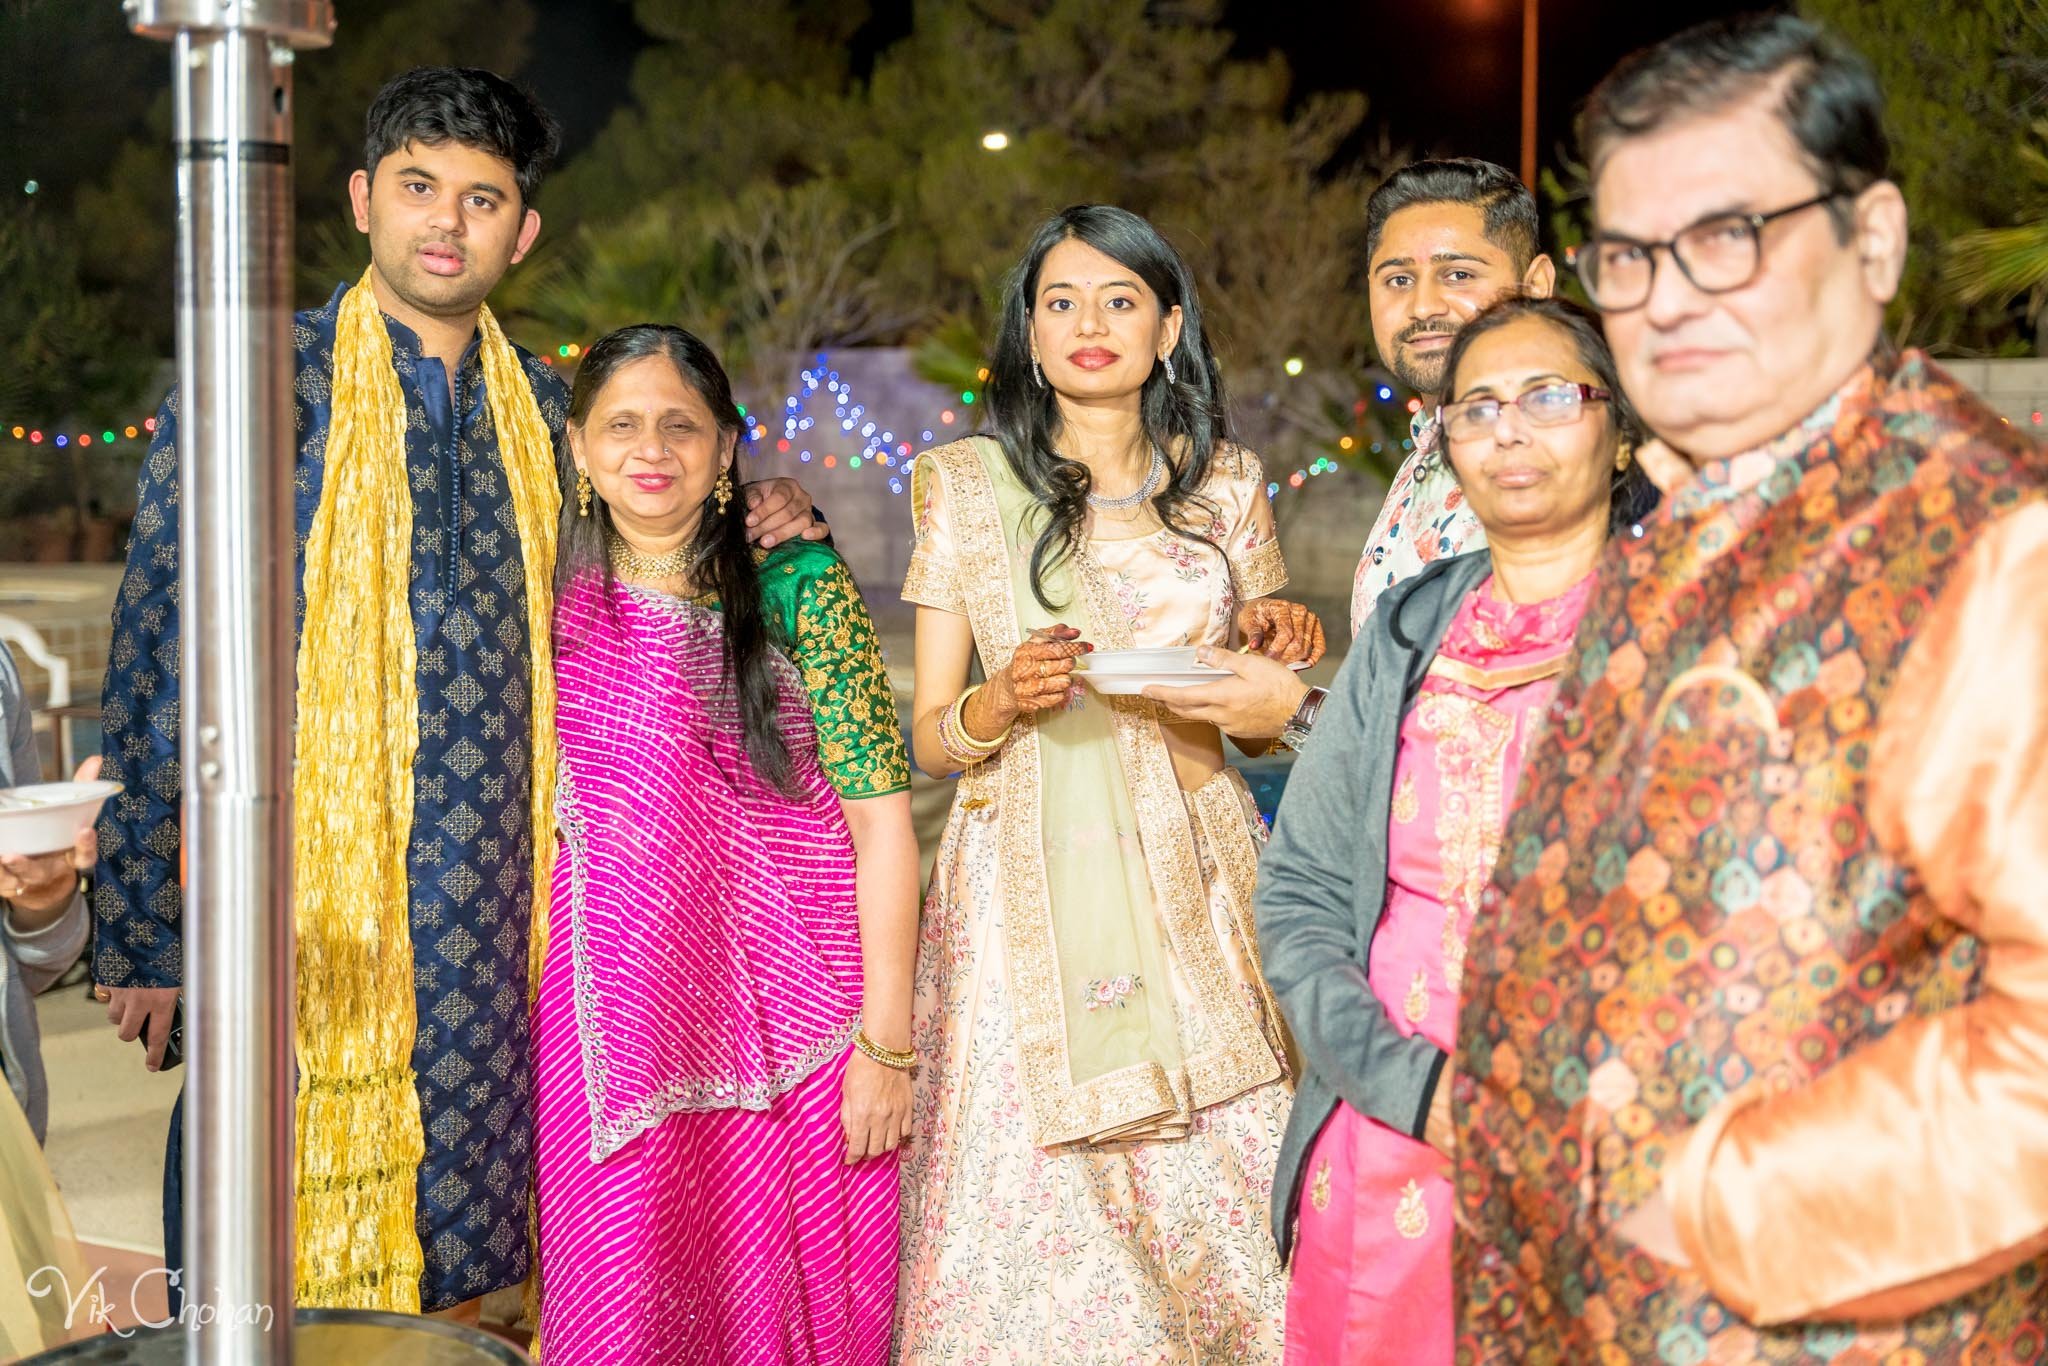 2022-02-04-Hely-&-Parth-Garba-Night-Indian-Wedding-Vik-Chohan-Photography-Photo-Booth-Social-Media-VCP-034.jpg